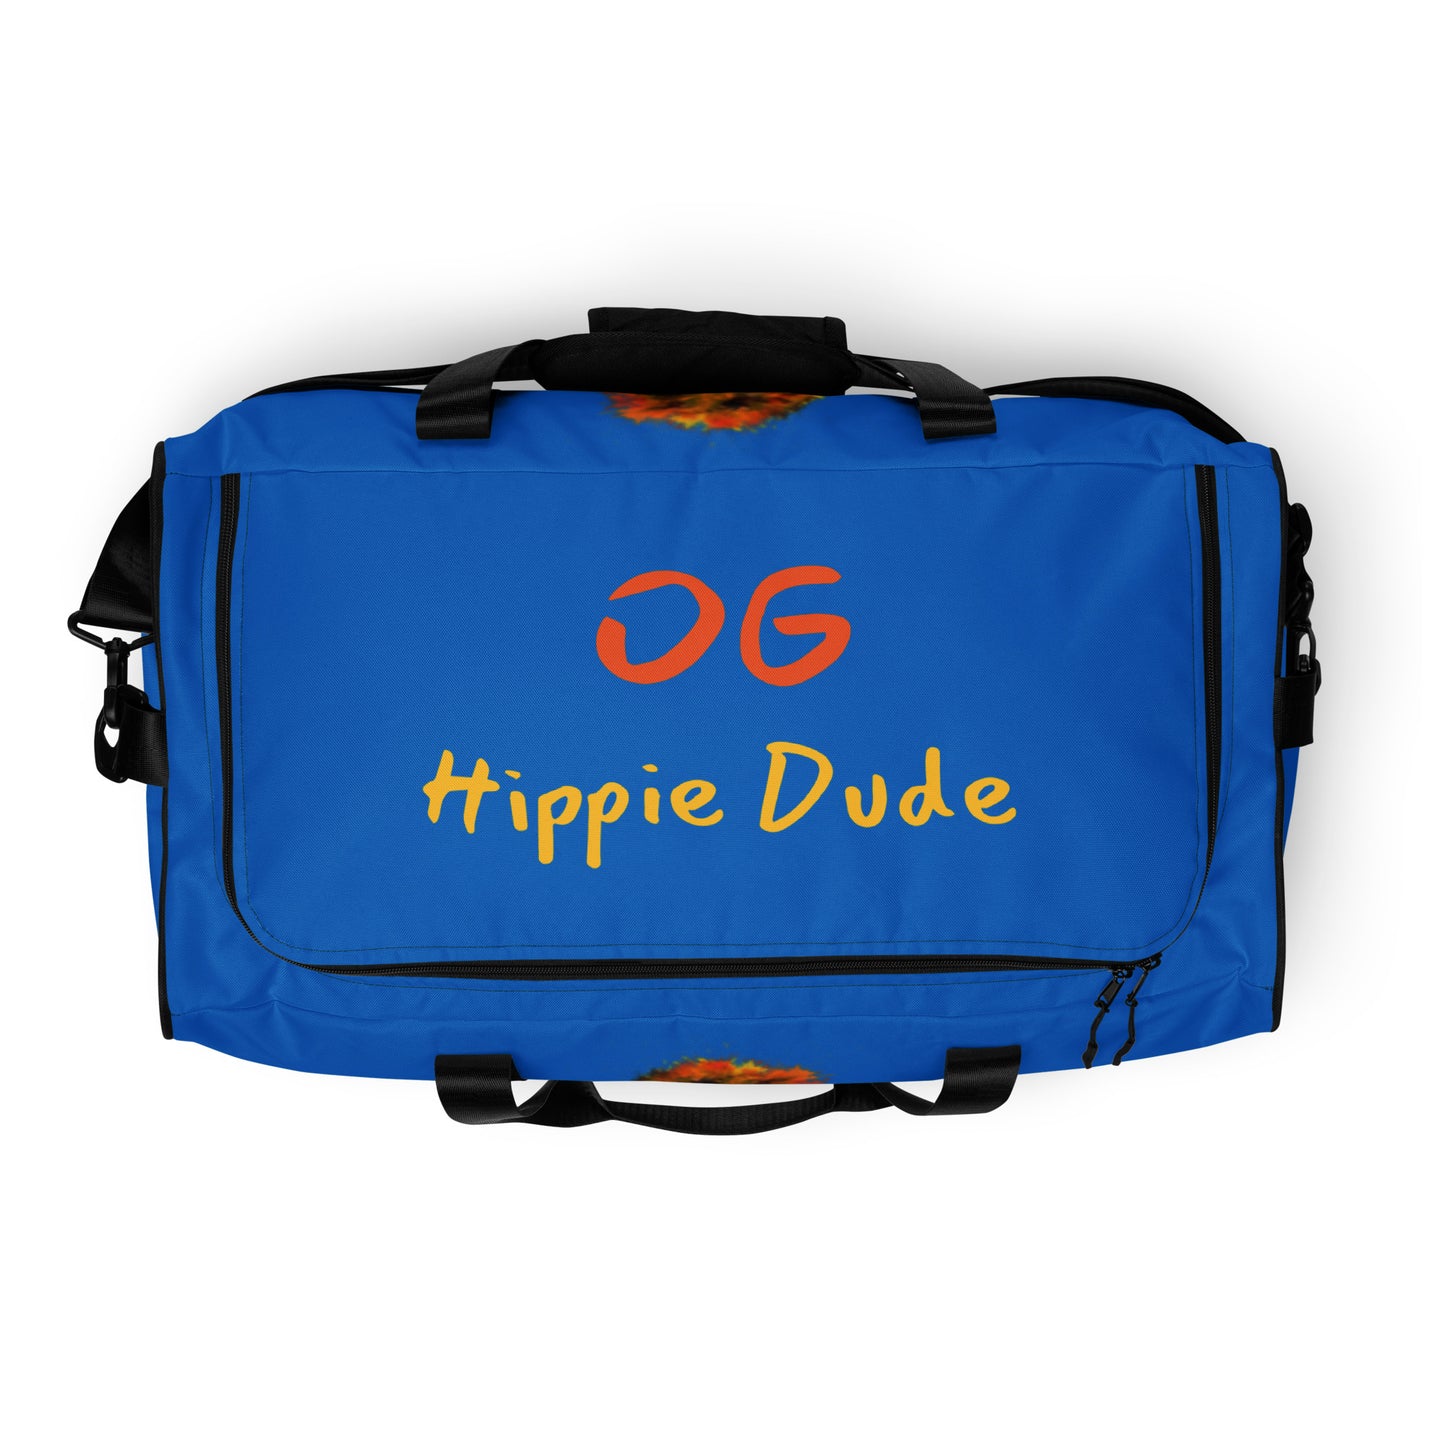 Blue Duffle Bag - OG Hippie Dude